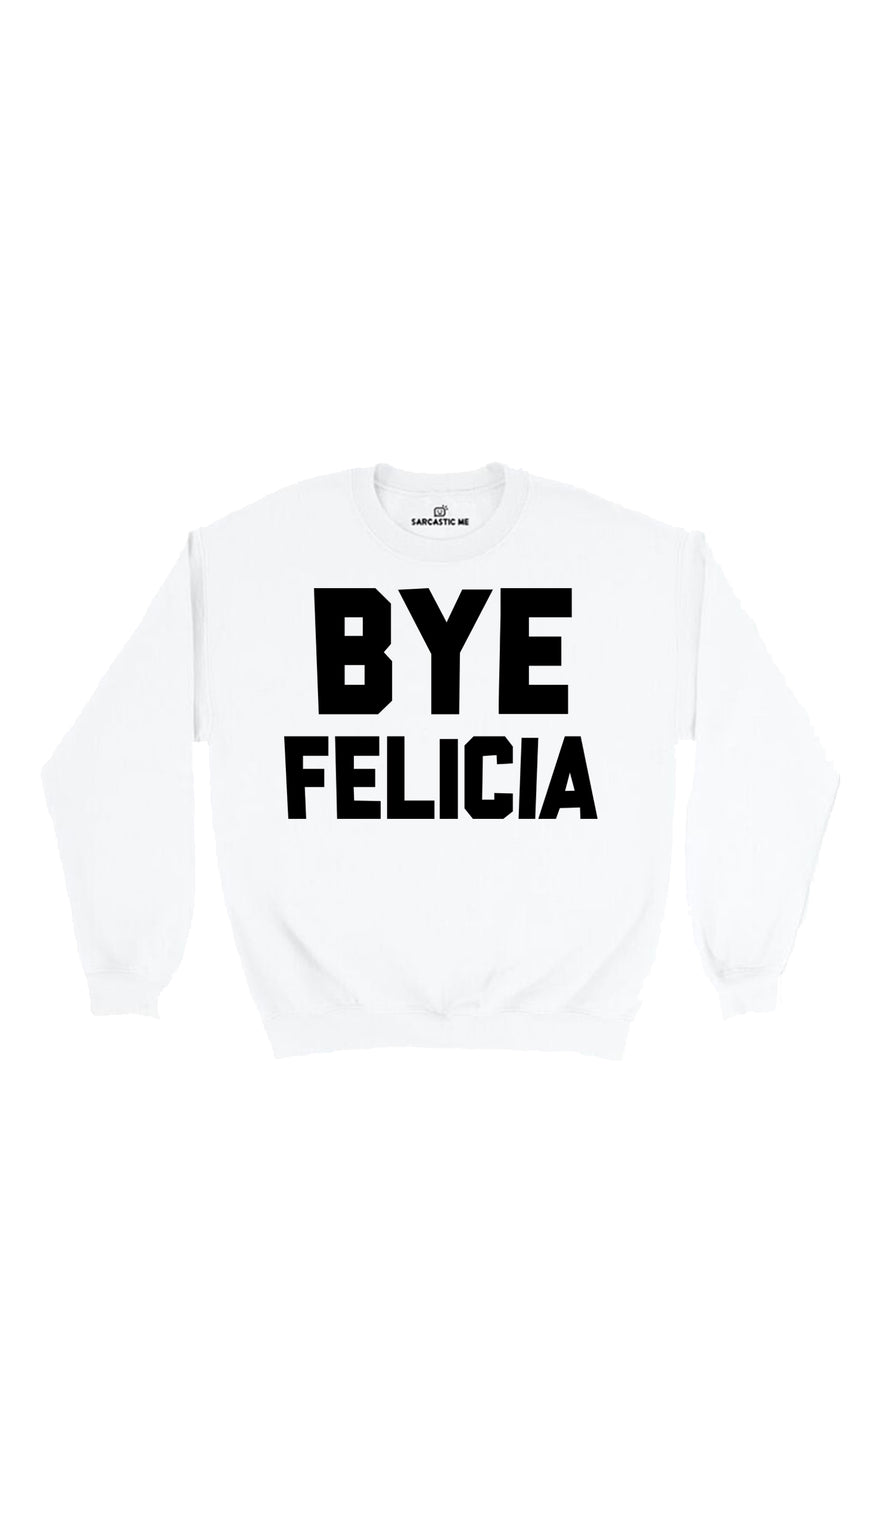 Bye Felicia White Unisex Pullover Sweatshirt | Sarcastic Me